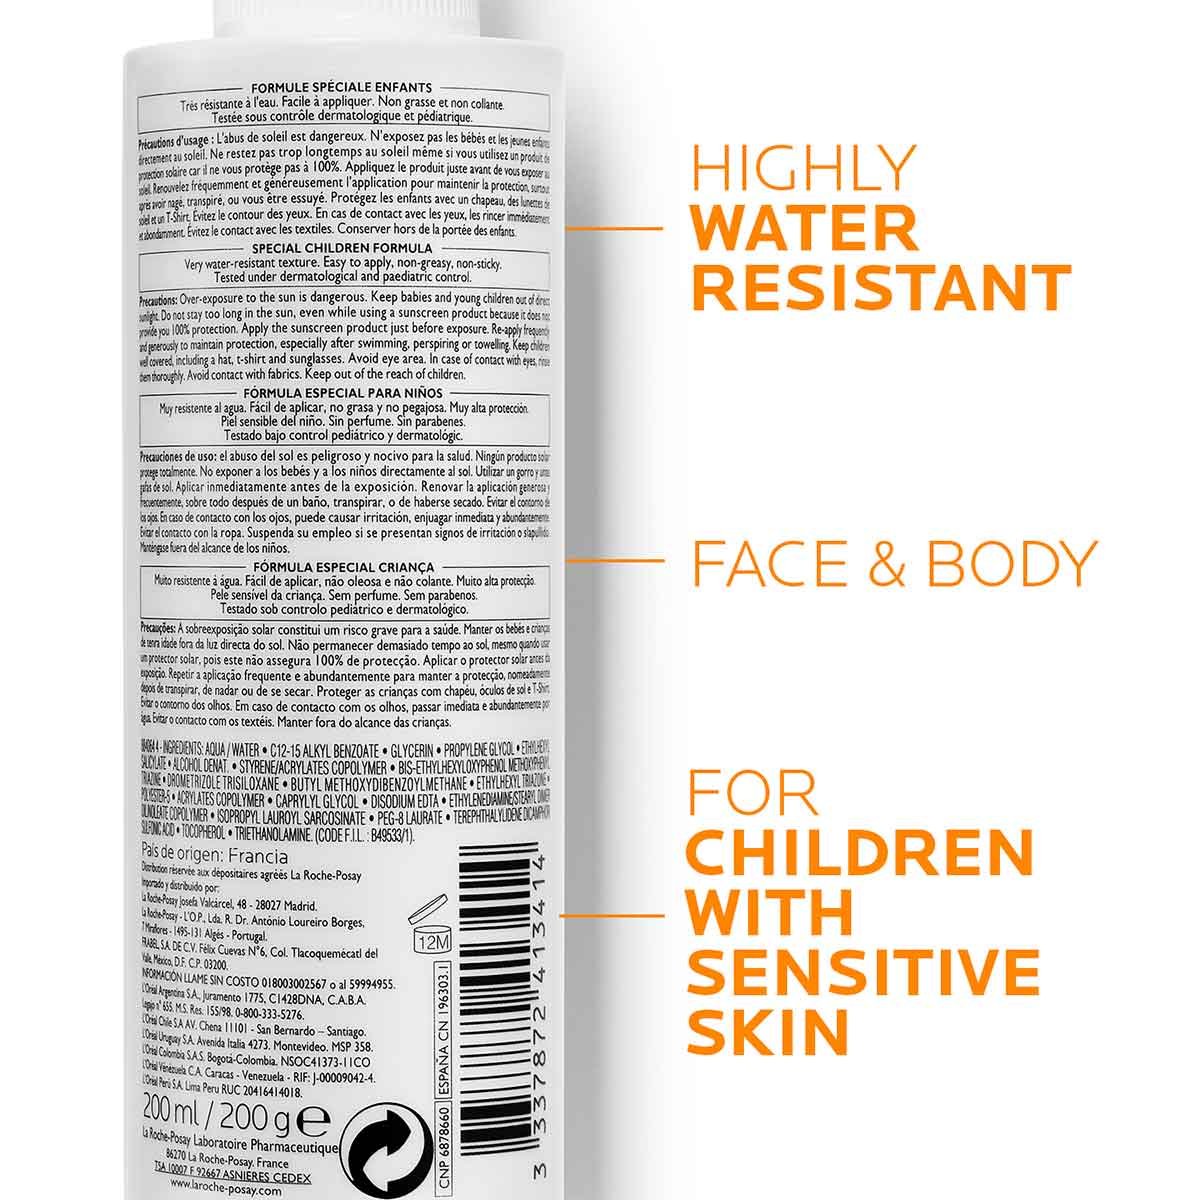 Retro confezione Anthelios dermo-pediatrics spray SPF50 con indicazioni: Highly Water Resistant, Face & Body, For Children With Sensitive Skin